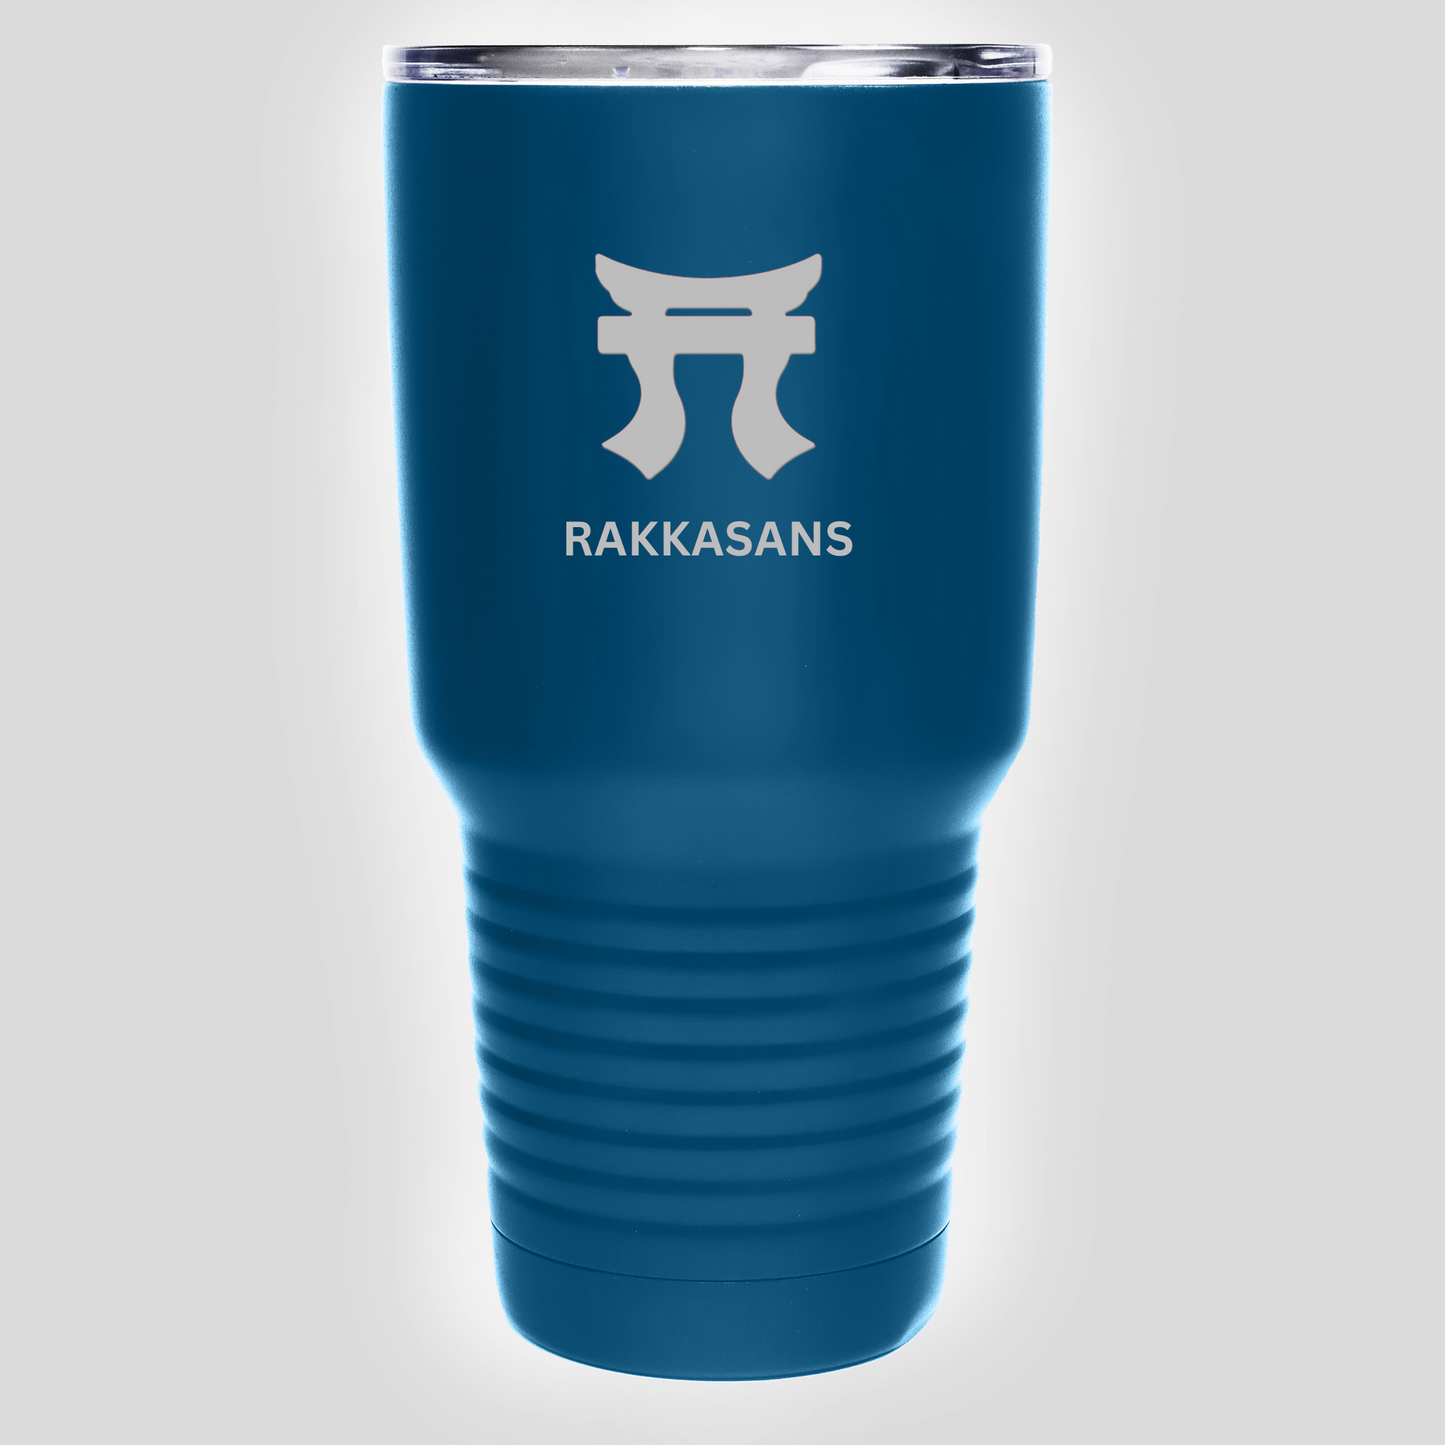 "Blue Rakkasans 30oz Stainless Steel Tumbler with Laser Engraved Design."